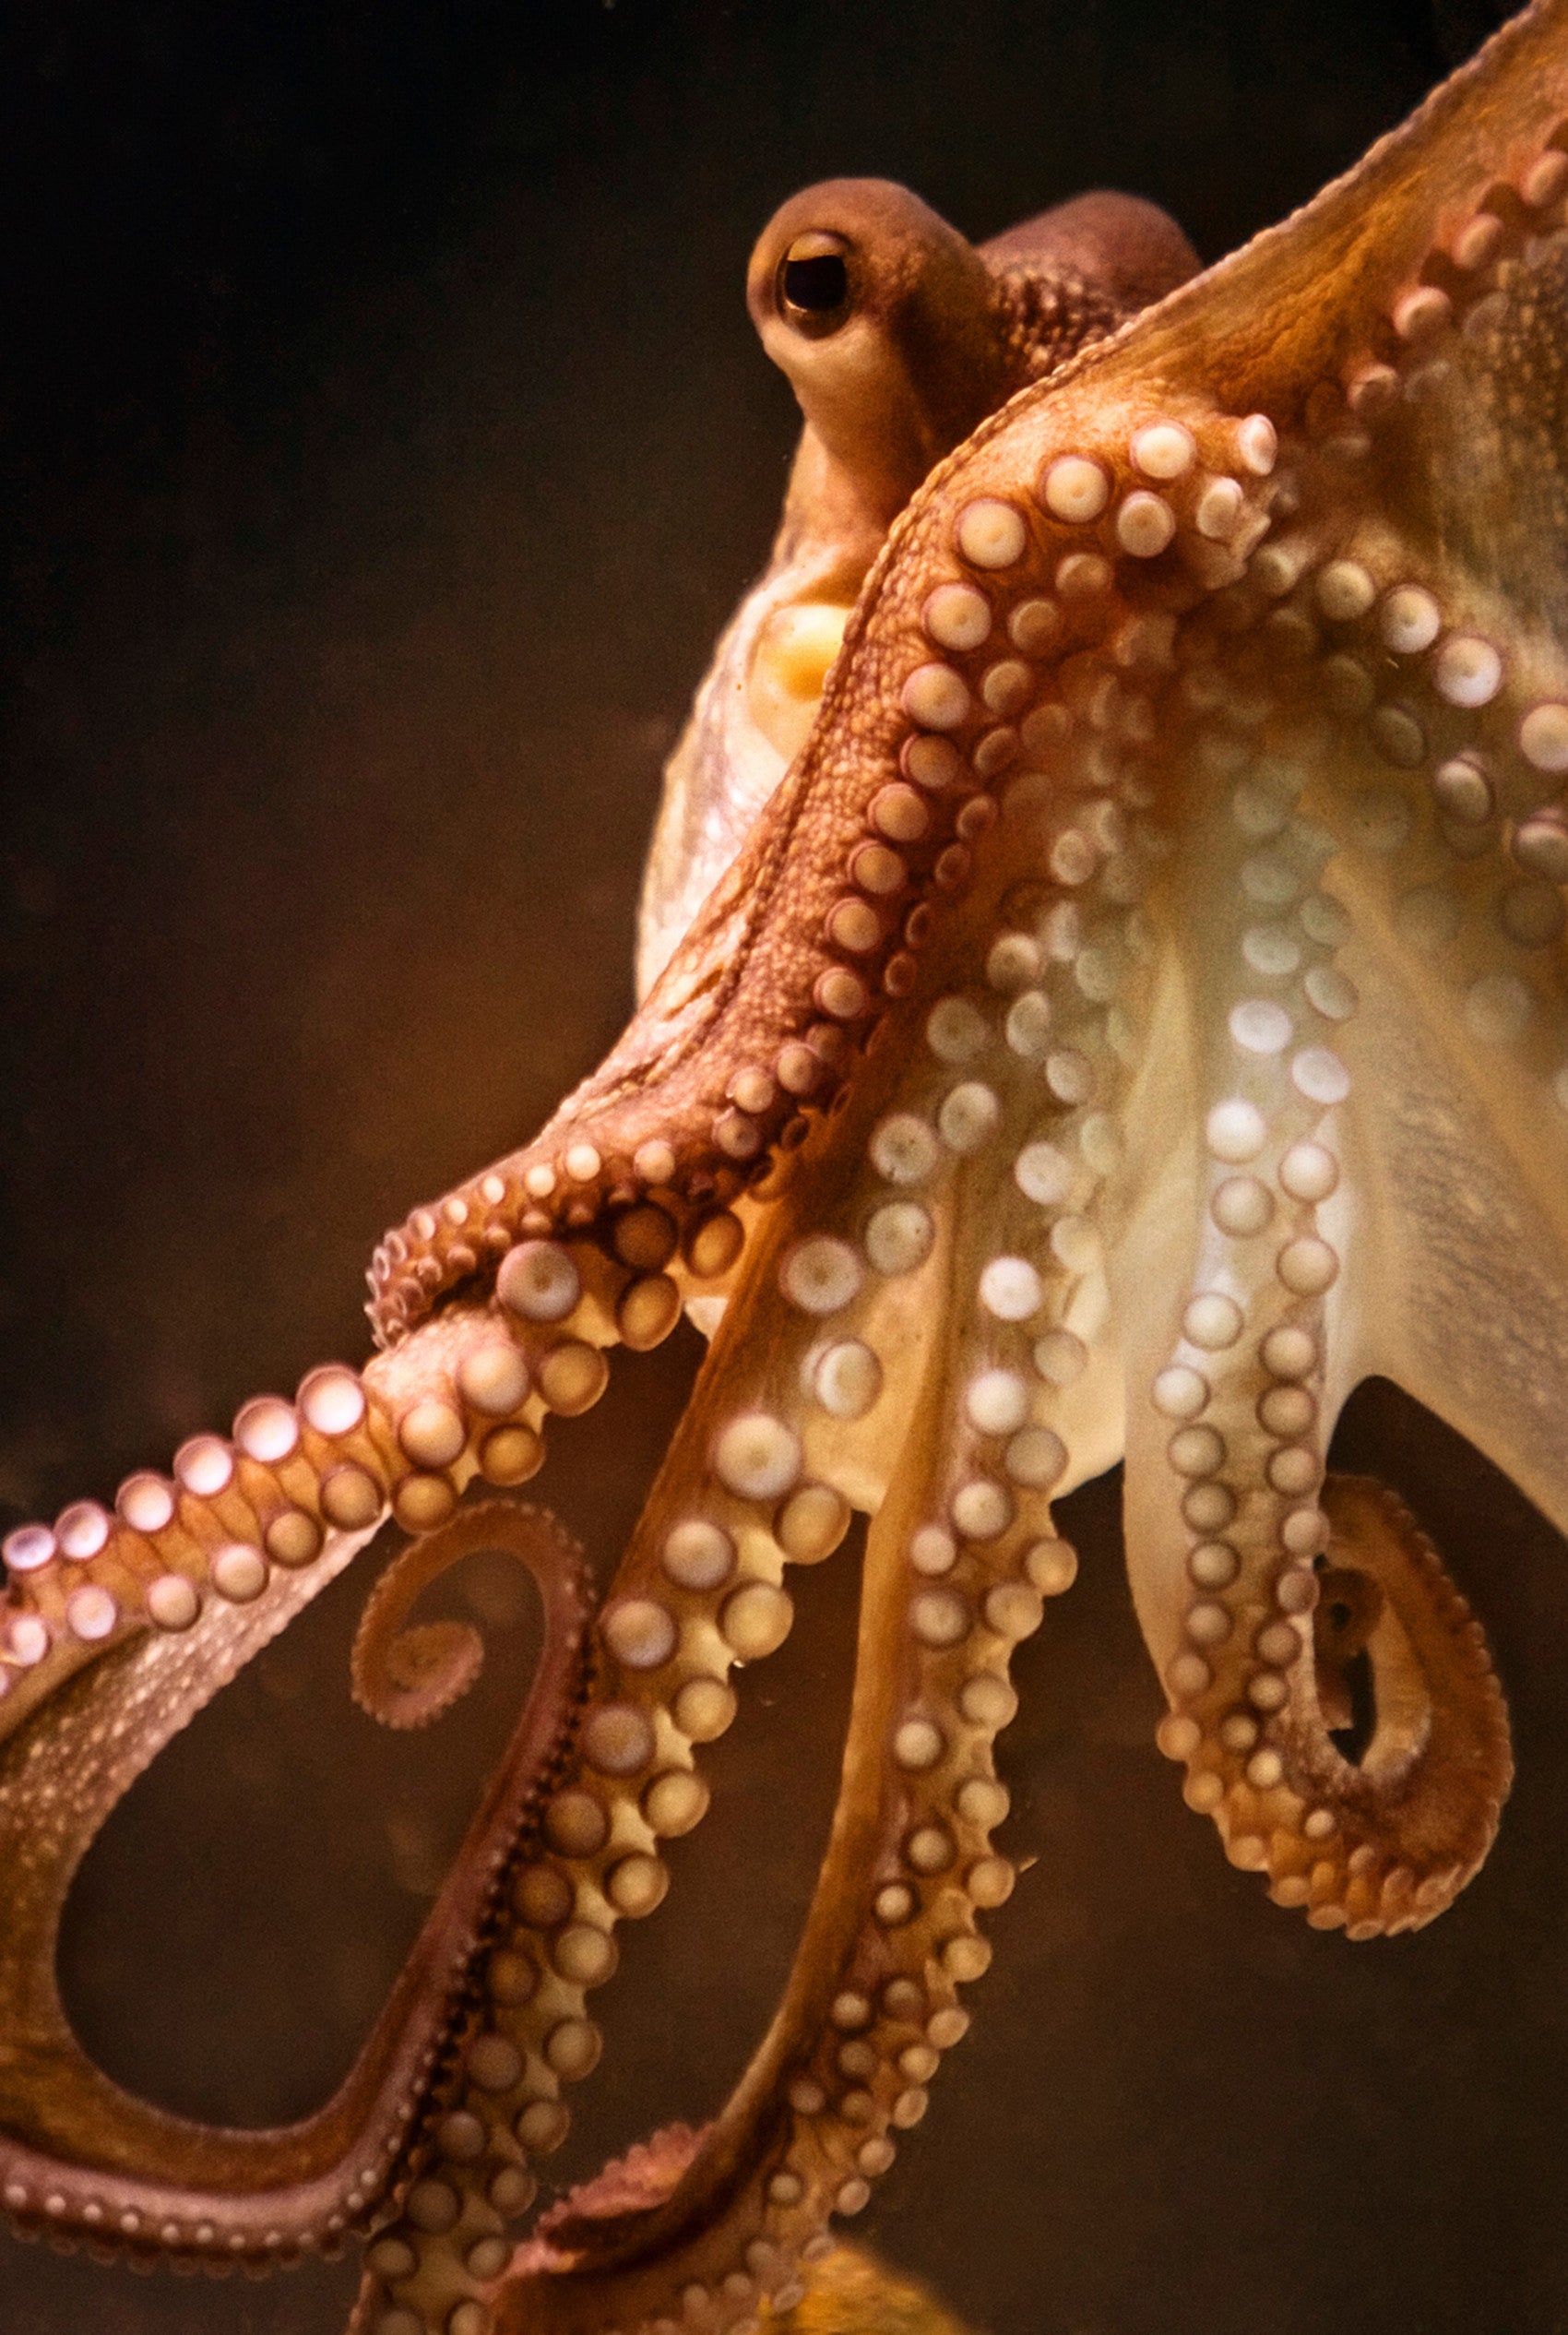 A close up of an octopus